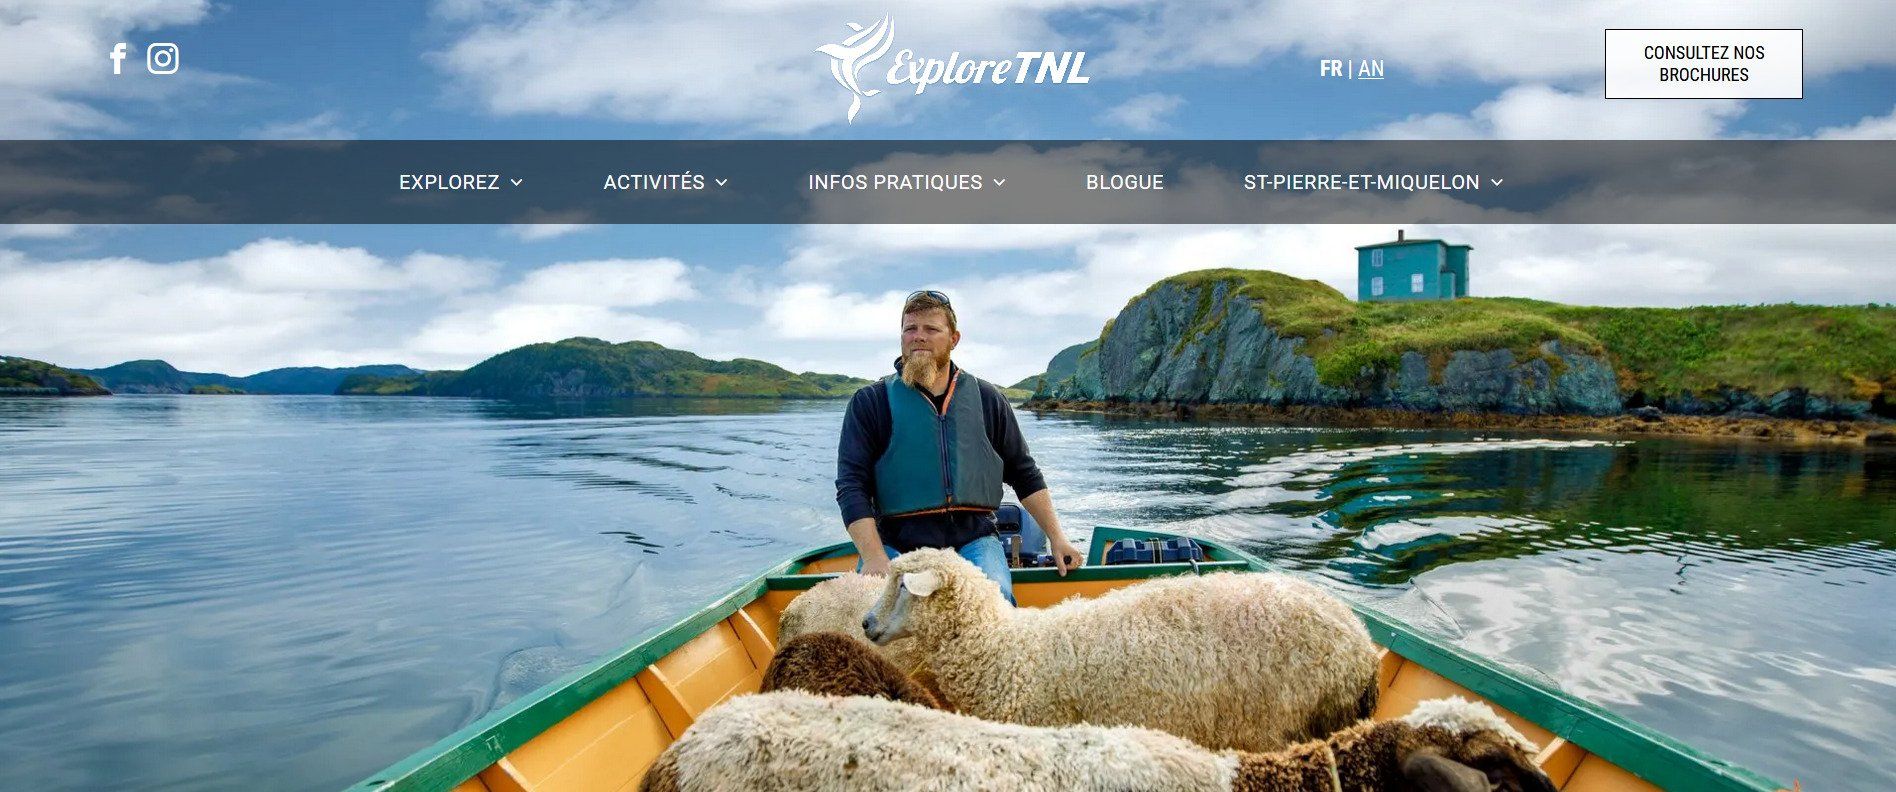 ExploreTNL.ca website interface.